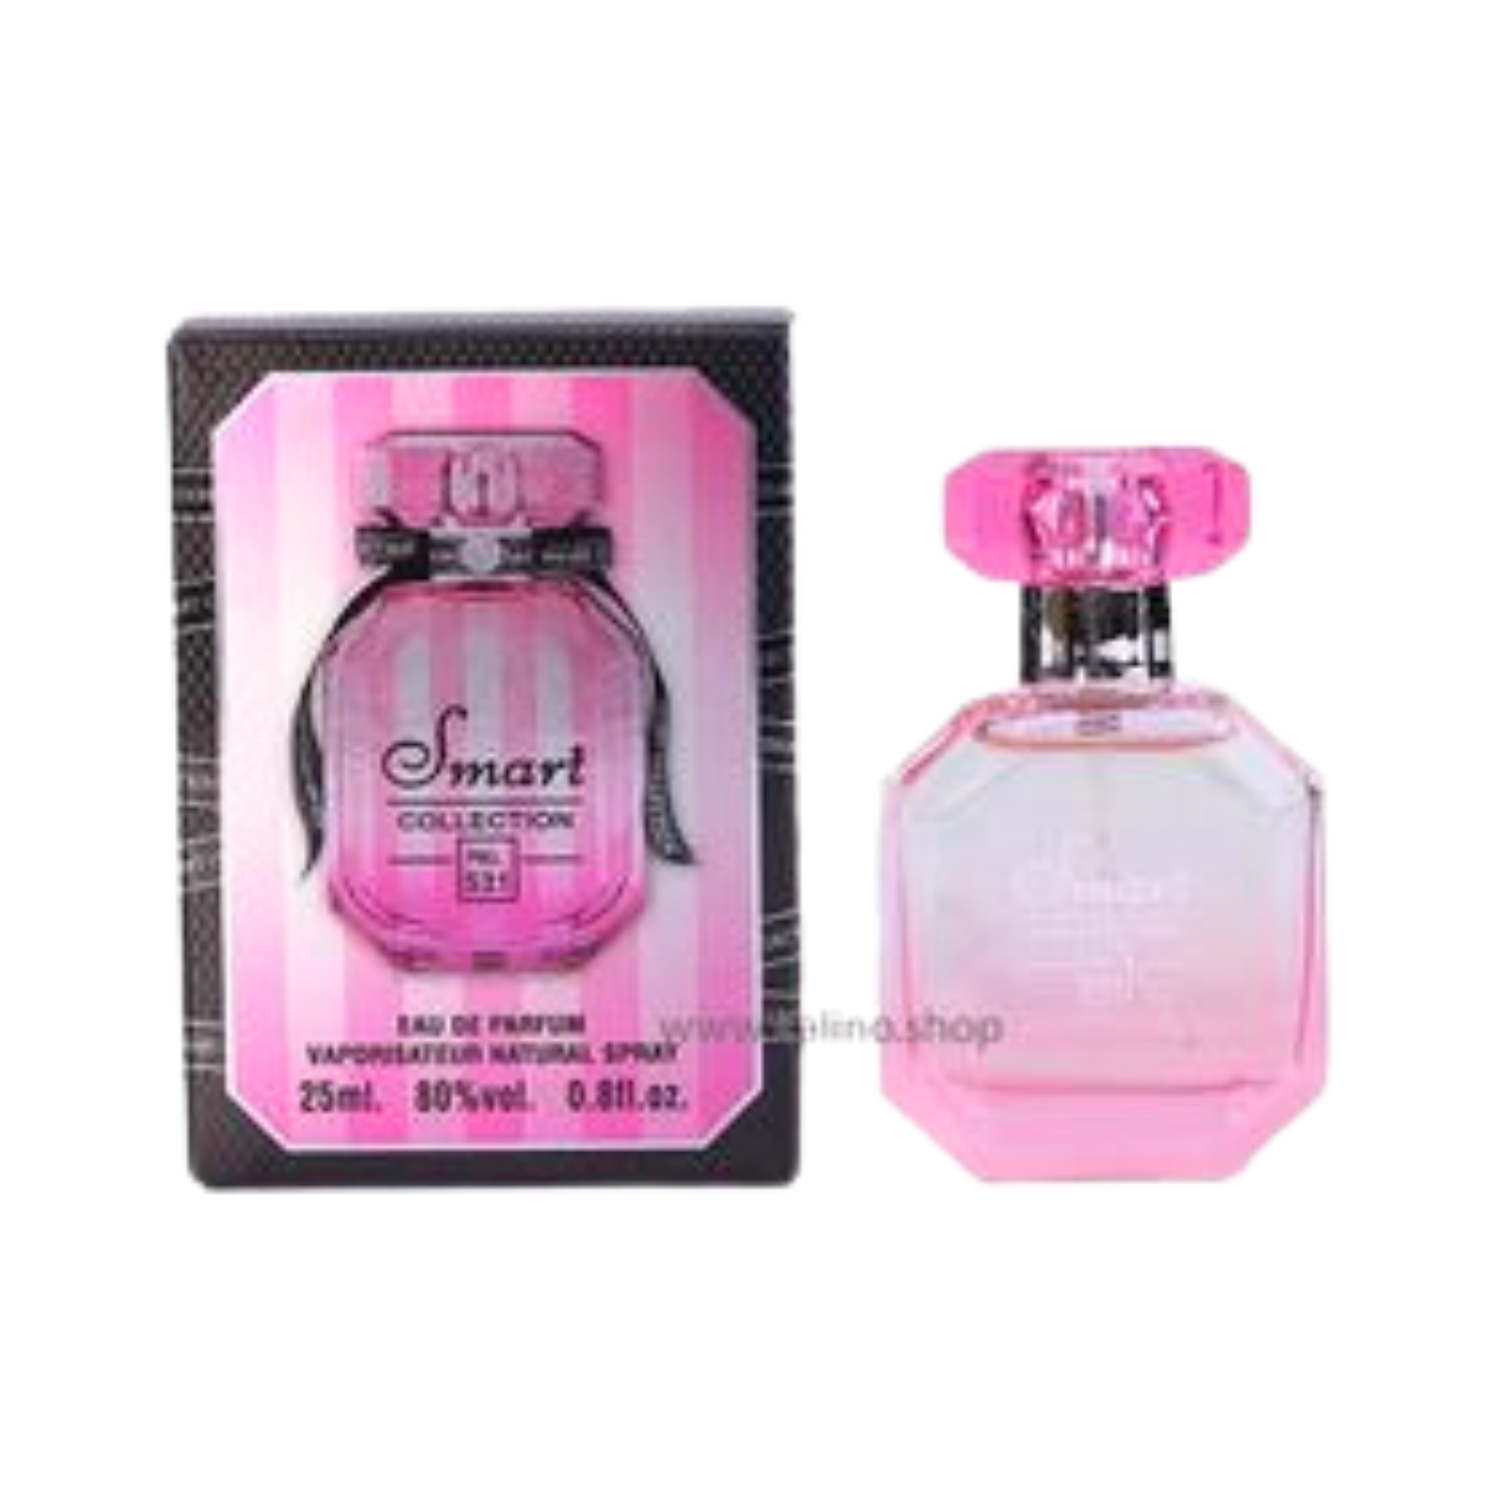 smart-collection-perfume-no-531-25ml